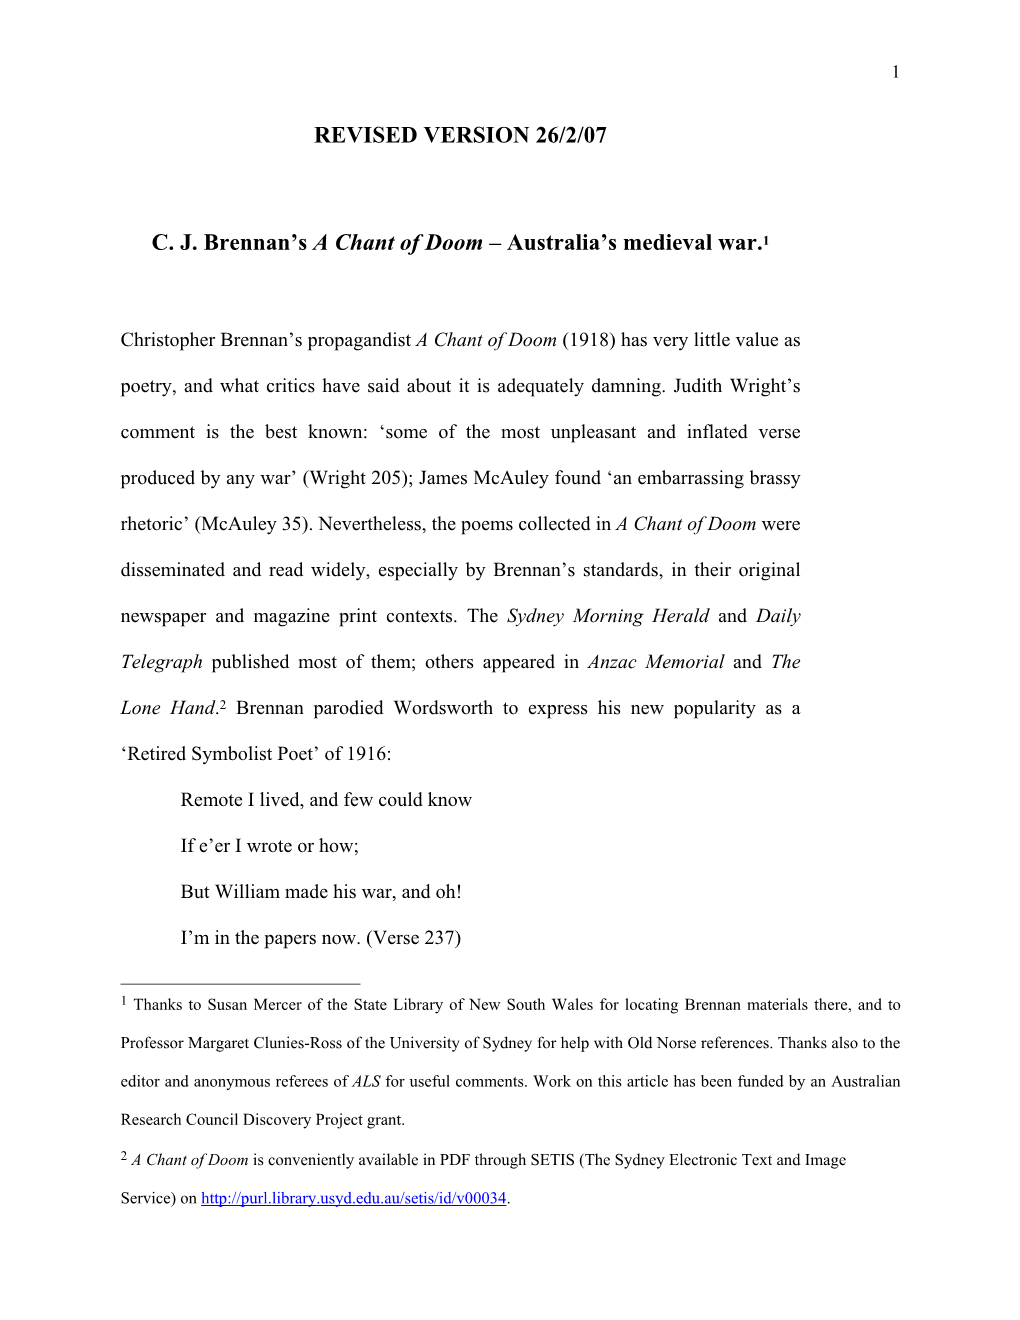 REVISED VERSION 26/2/07 C. J. Brennan's a Chant of Doom – Australia's Medieval War.1